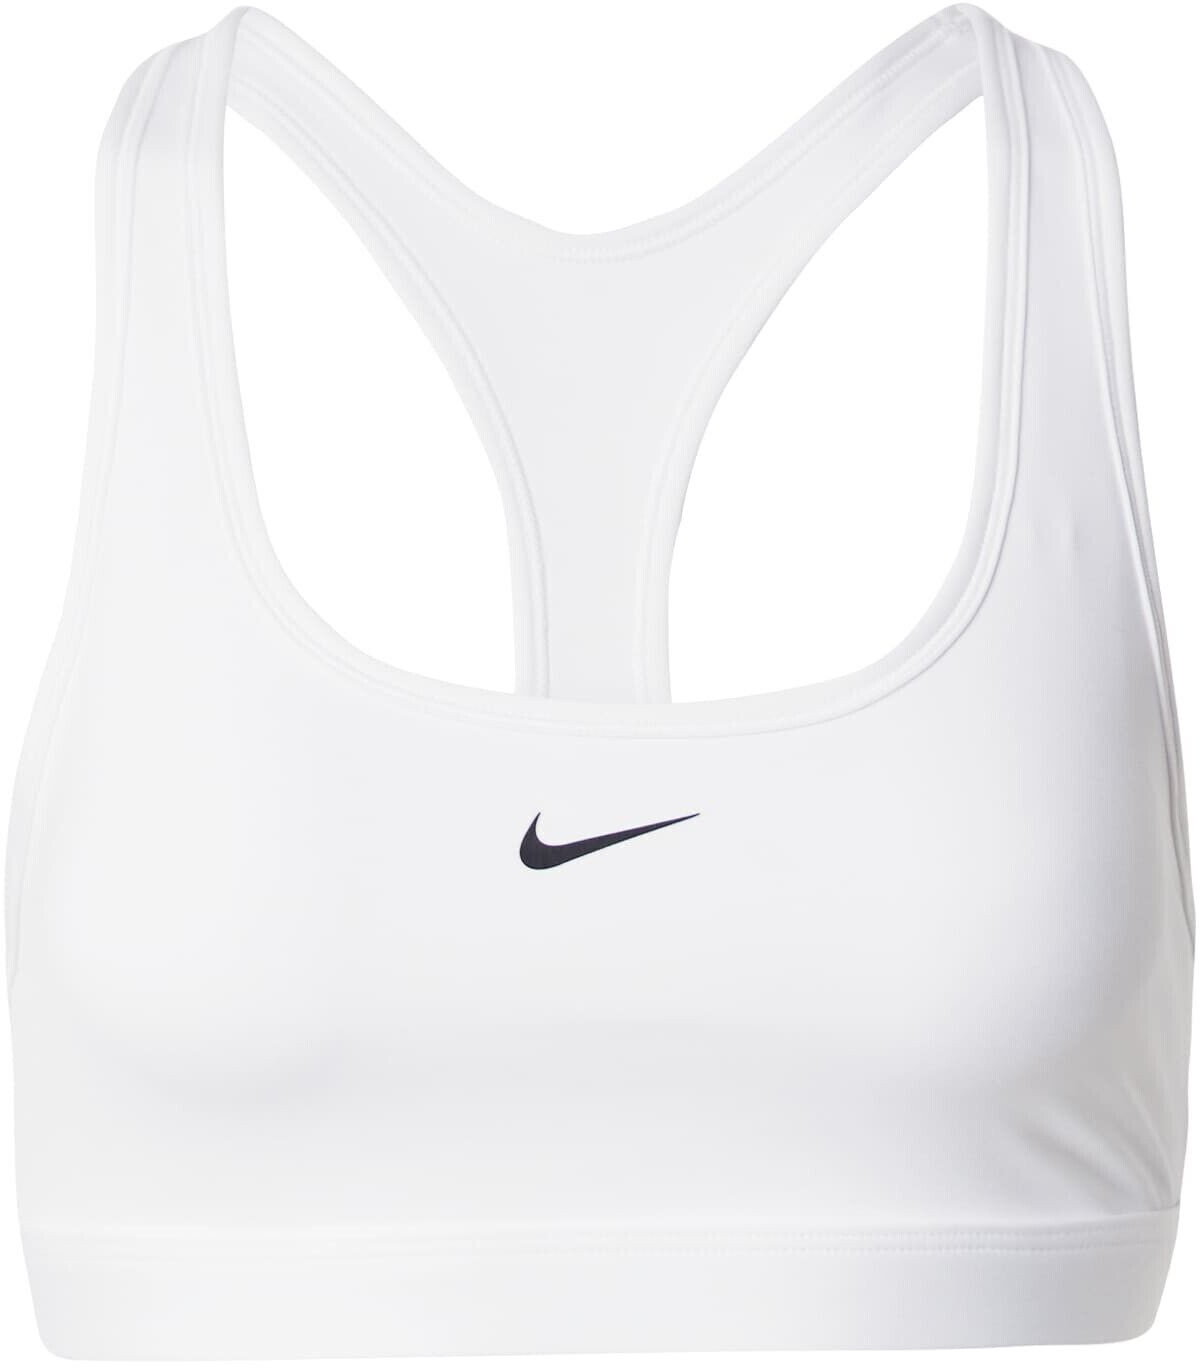 Womens Nike Swoosh Light Support Non- Padded Sports Bra